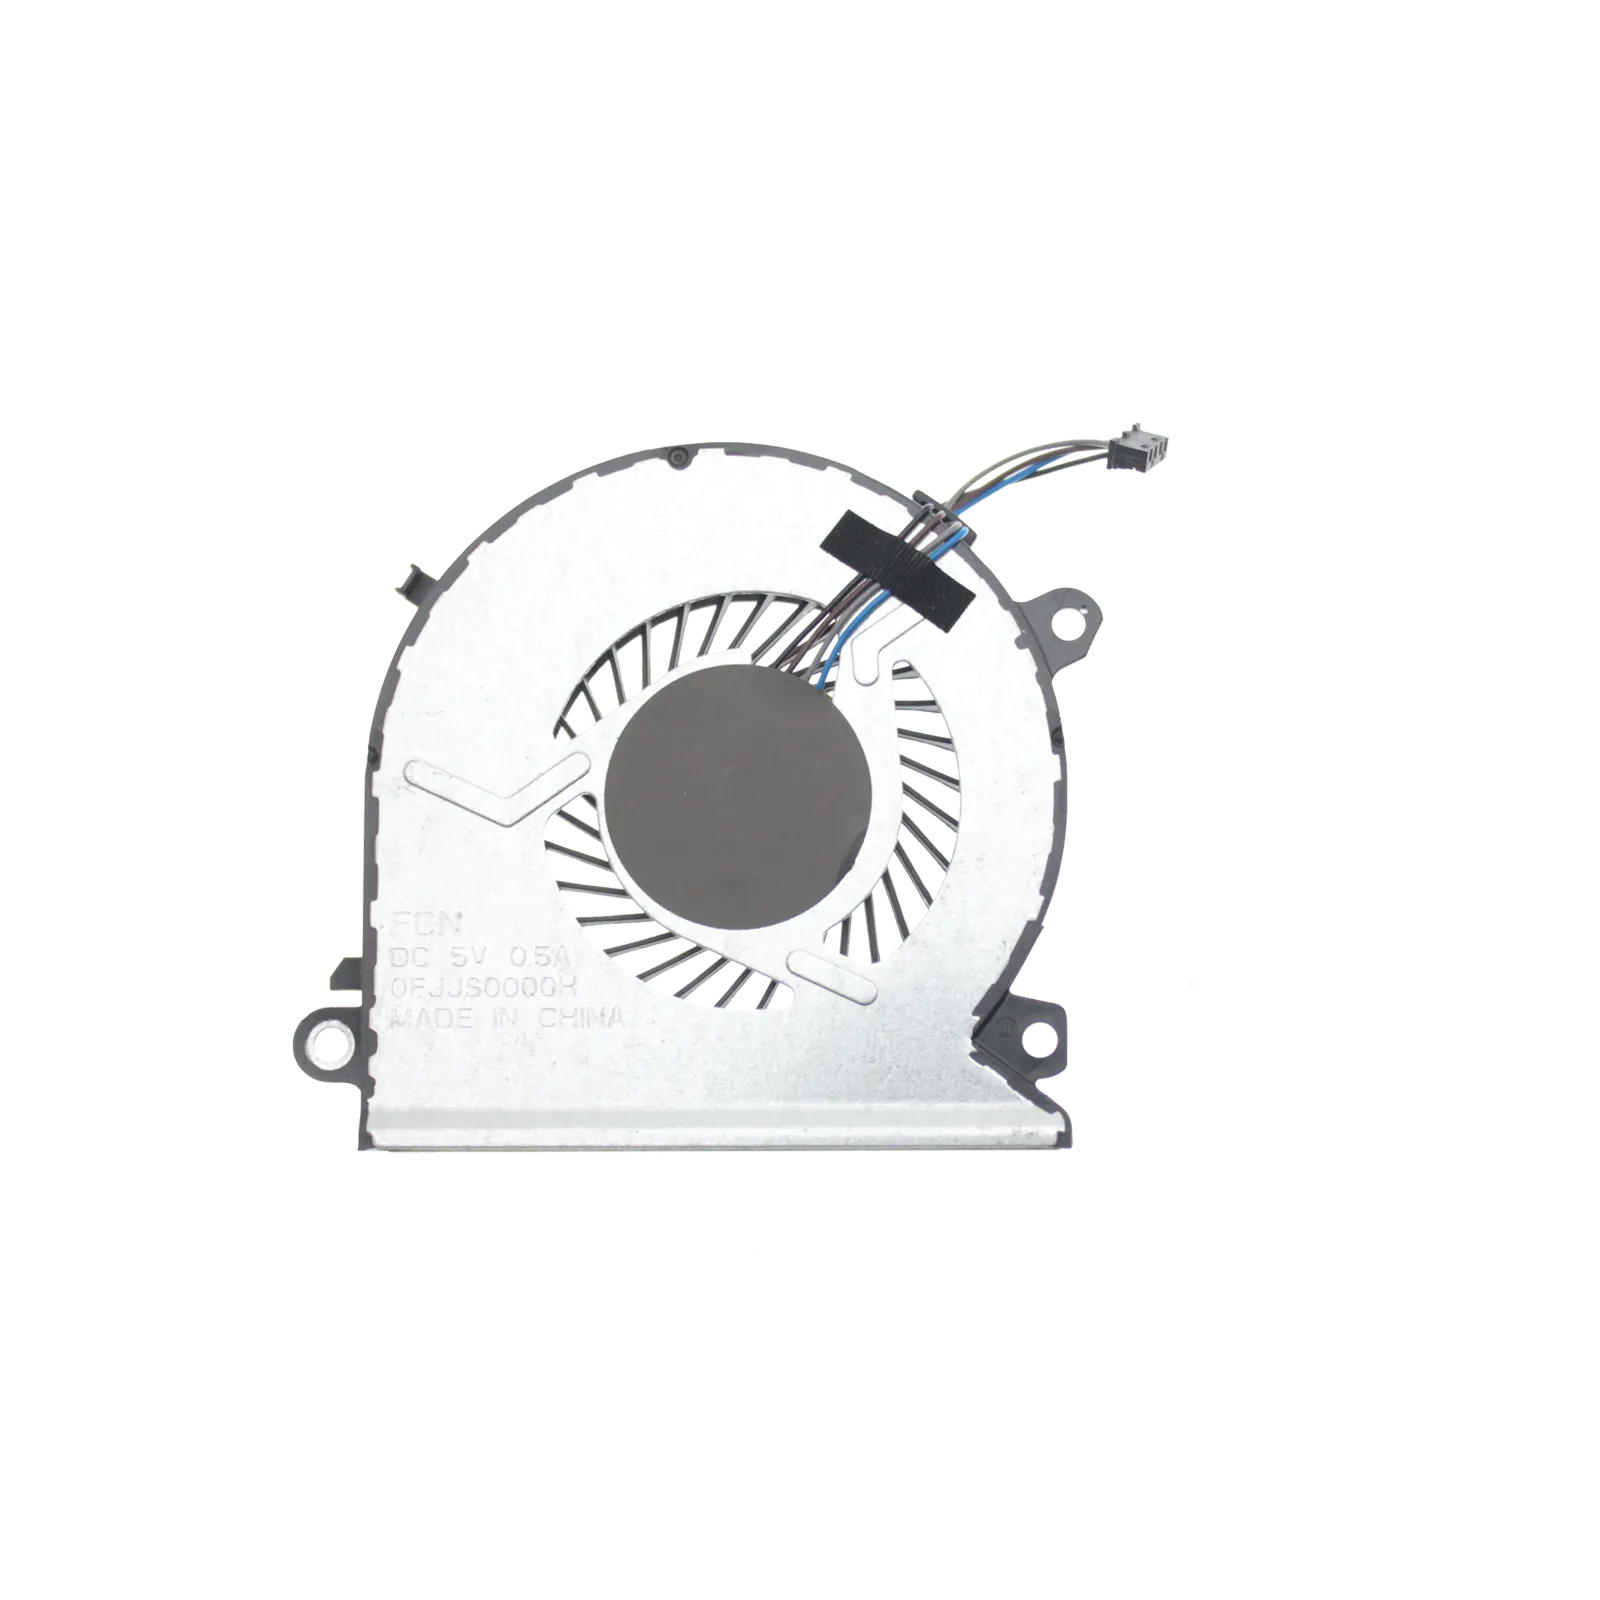 Casper Excalibur 0FL0F0000H, OFLOFOOOOH Cpu-Gpu Fan - İşlemci Fanı